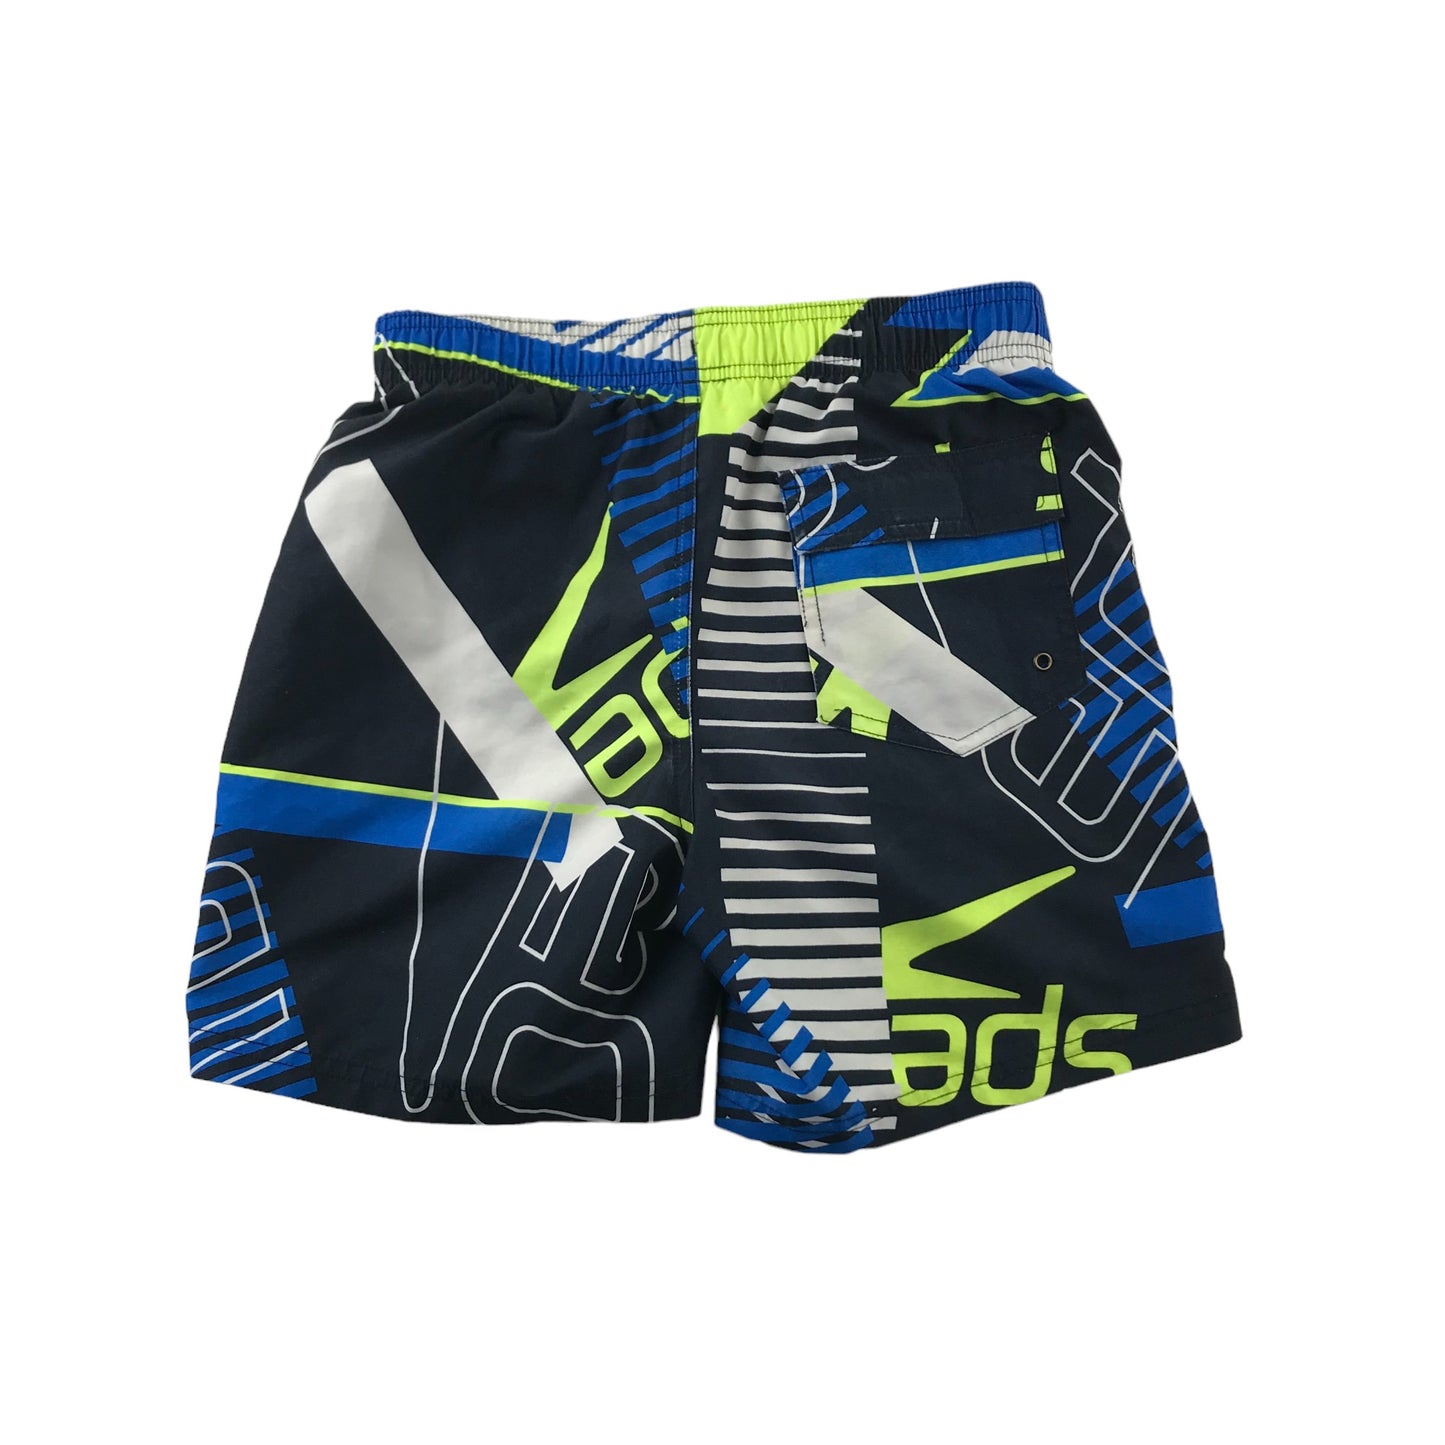 Speedo Swim Trunks Age 12-13 Navy Blue Neon Graphic Design Print Shorts